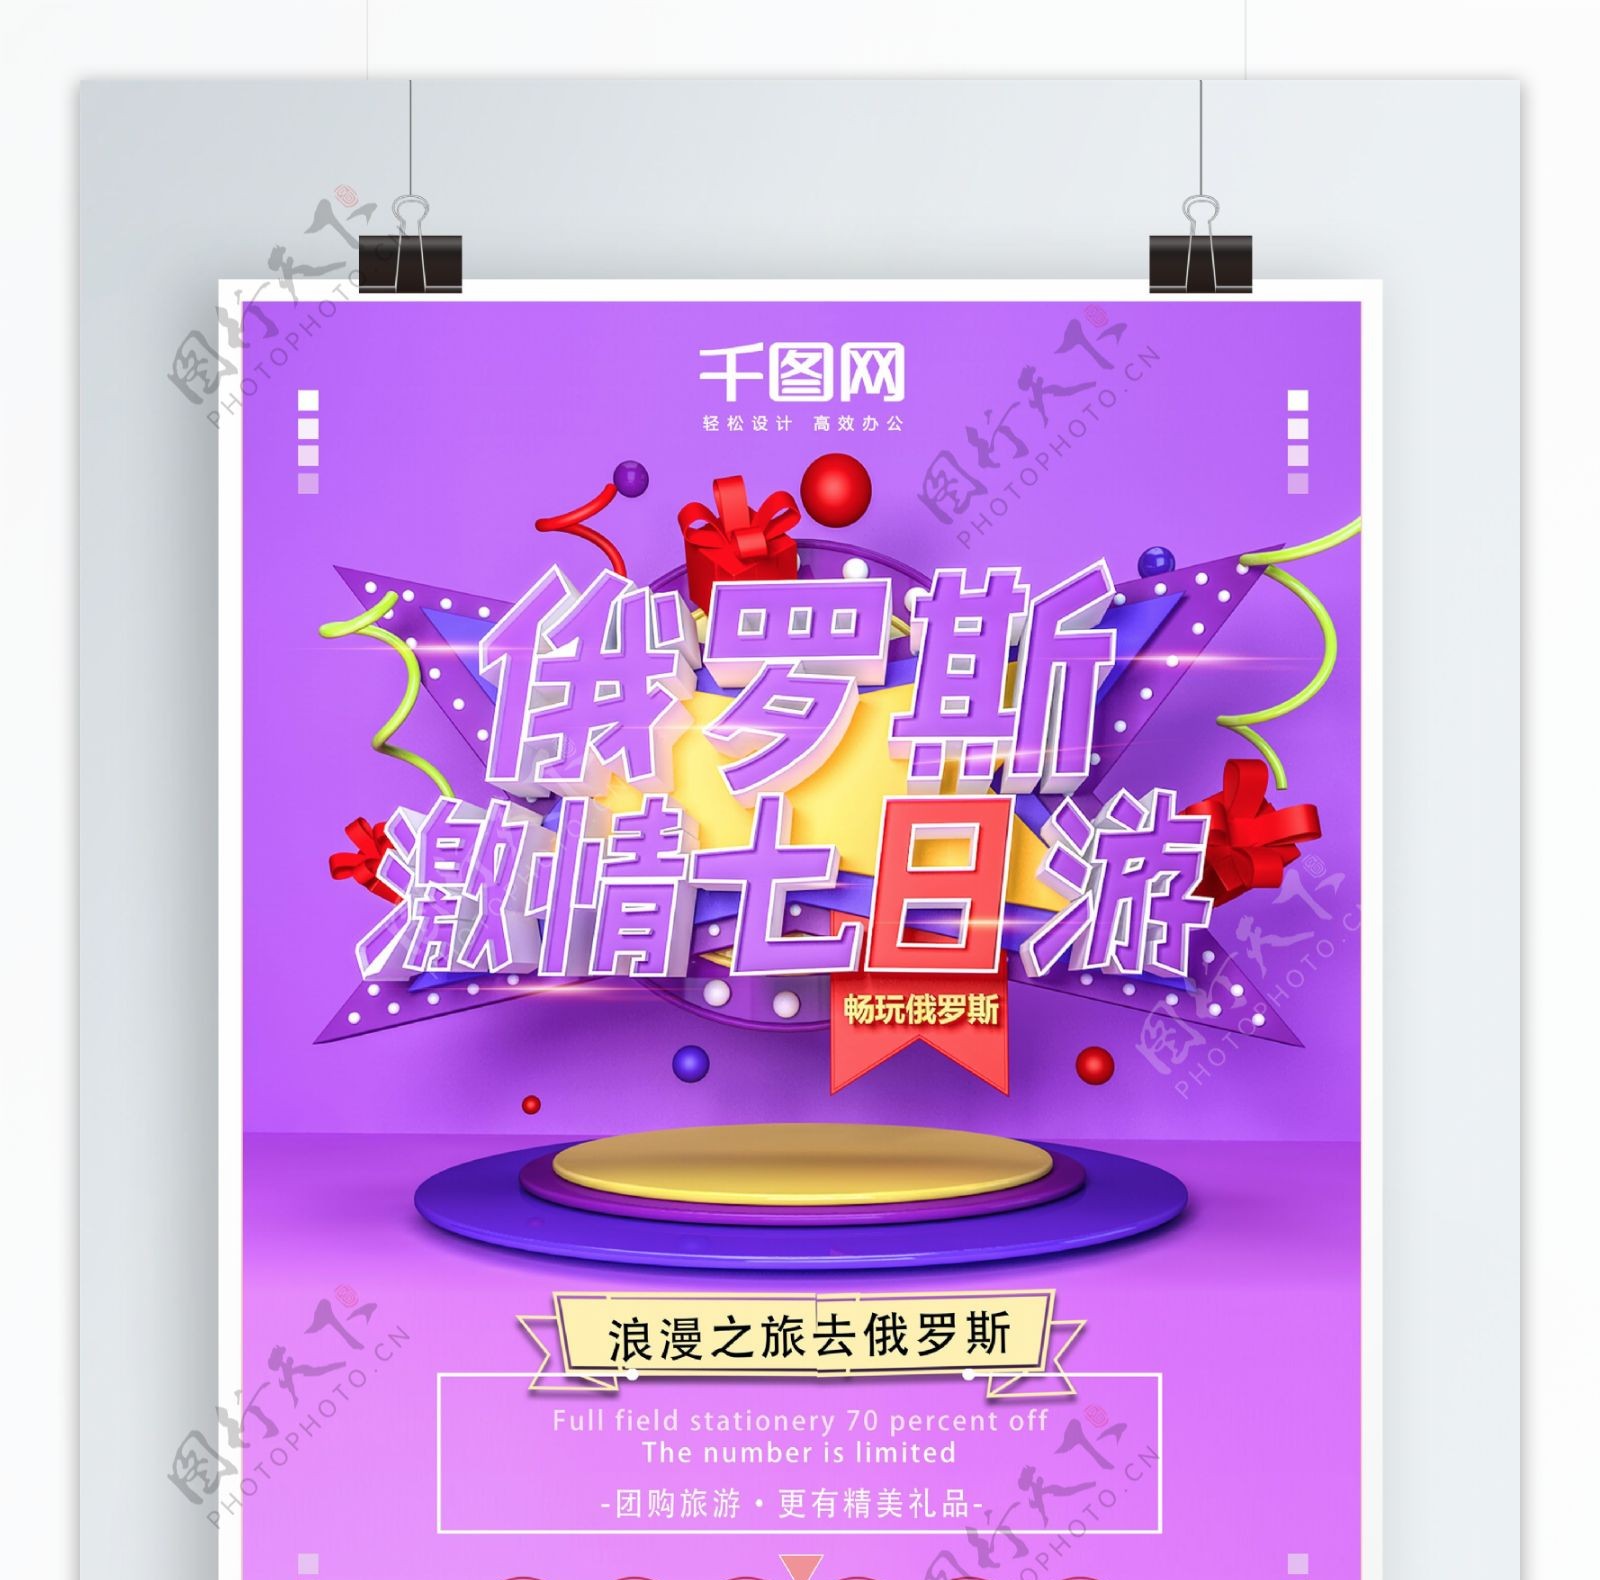 C4D紫色大气俄罗斯激情七日游海报设计